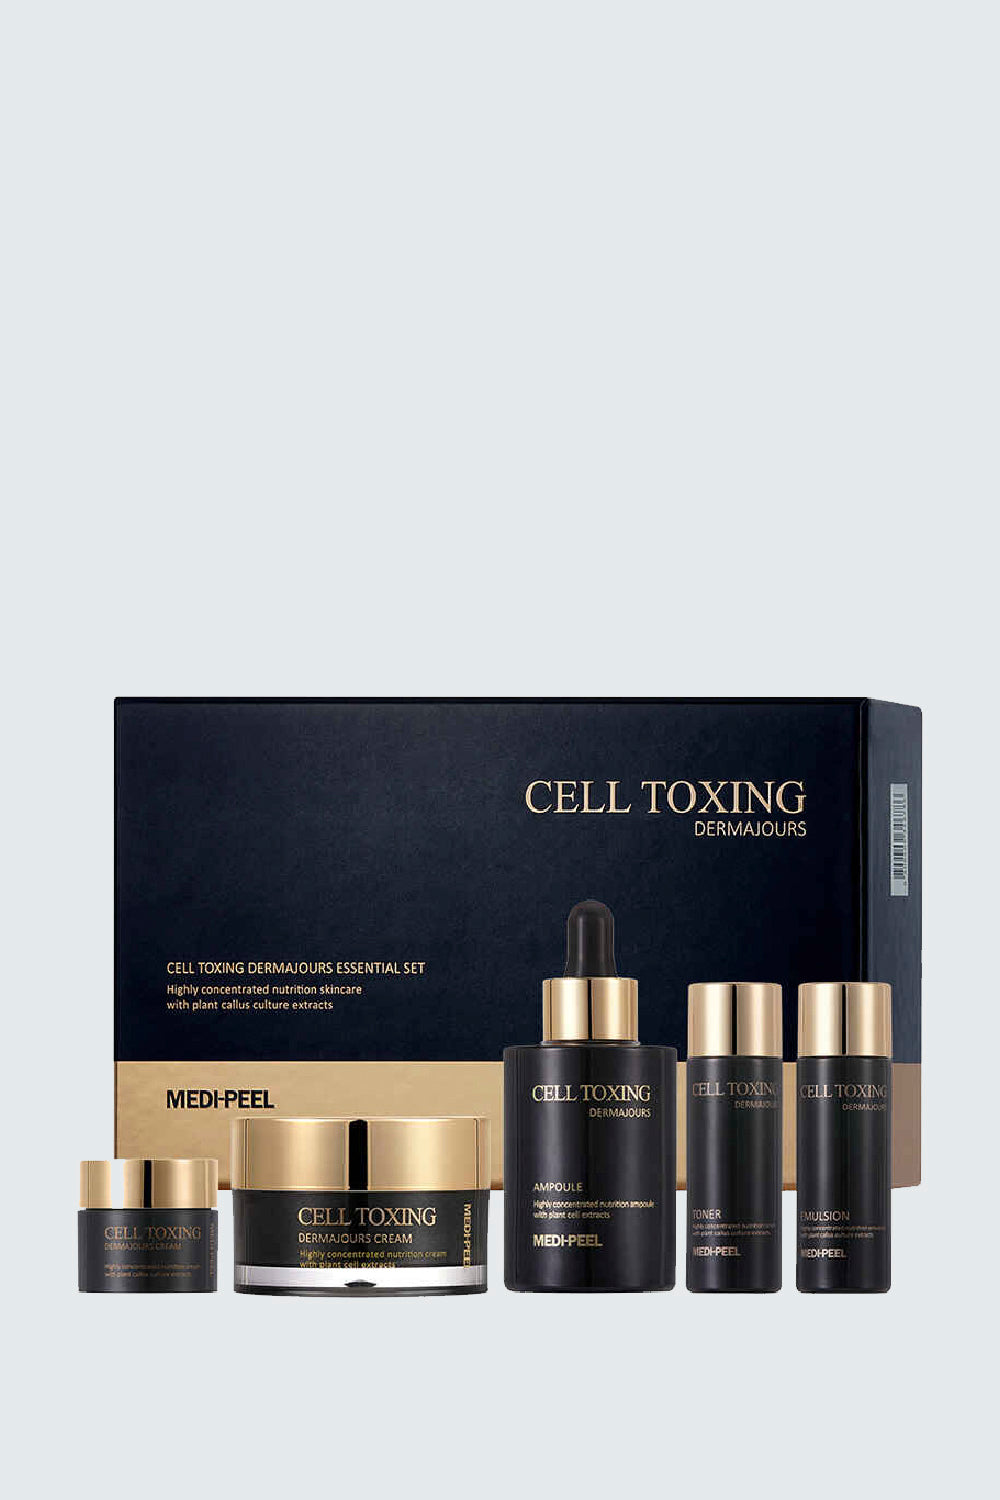 Cell Toxing Dermajours Essential Set - 100ml x 1, 50g x 1, 30ml x 2, 10g x 1 MEDI-PEEL